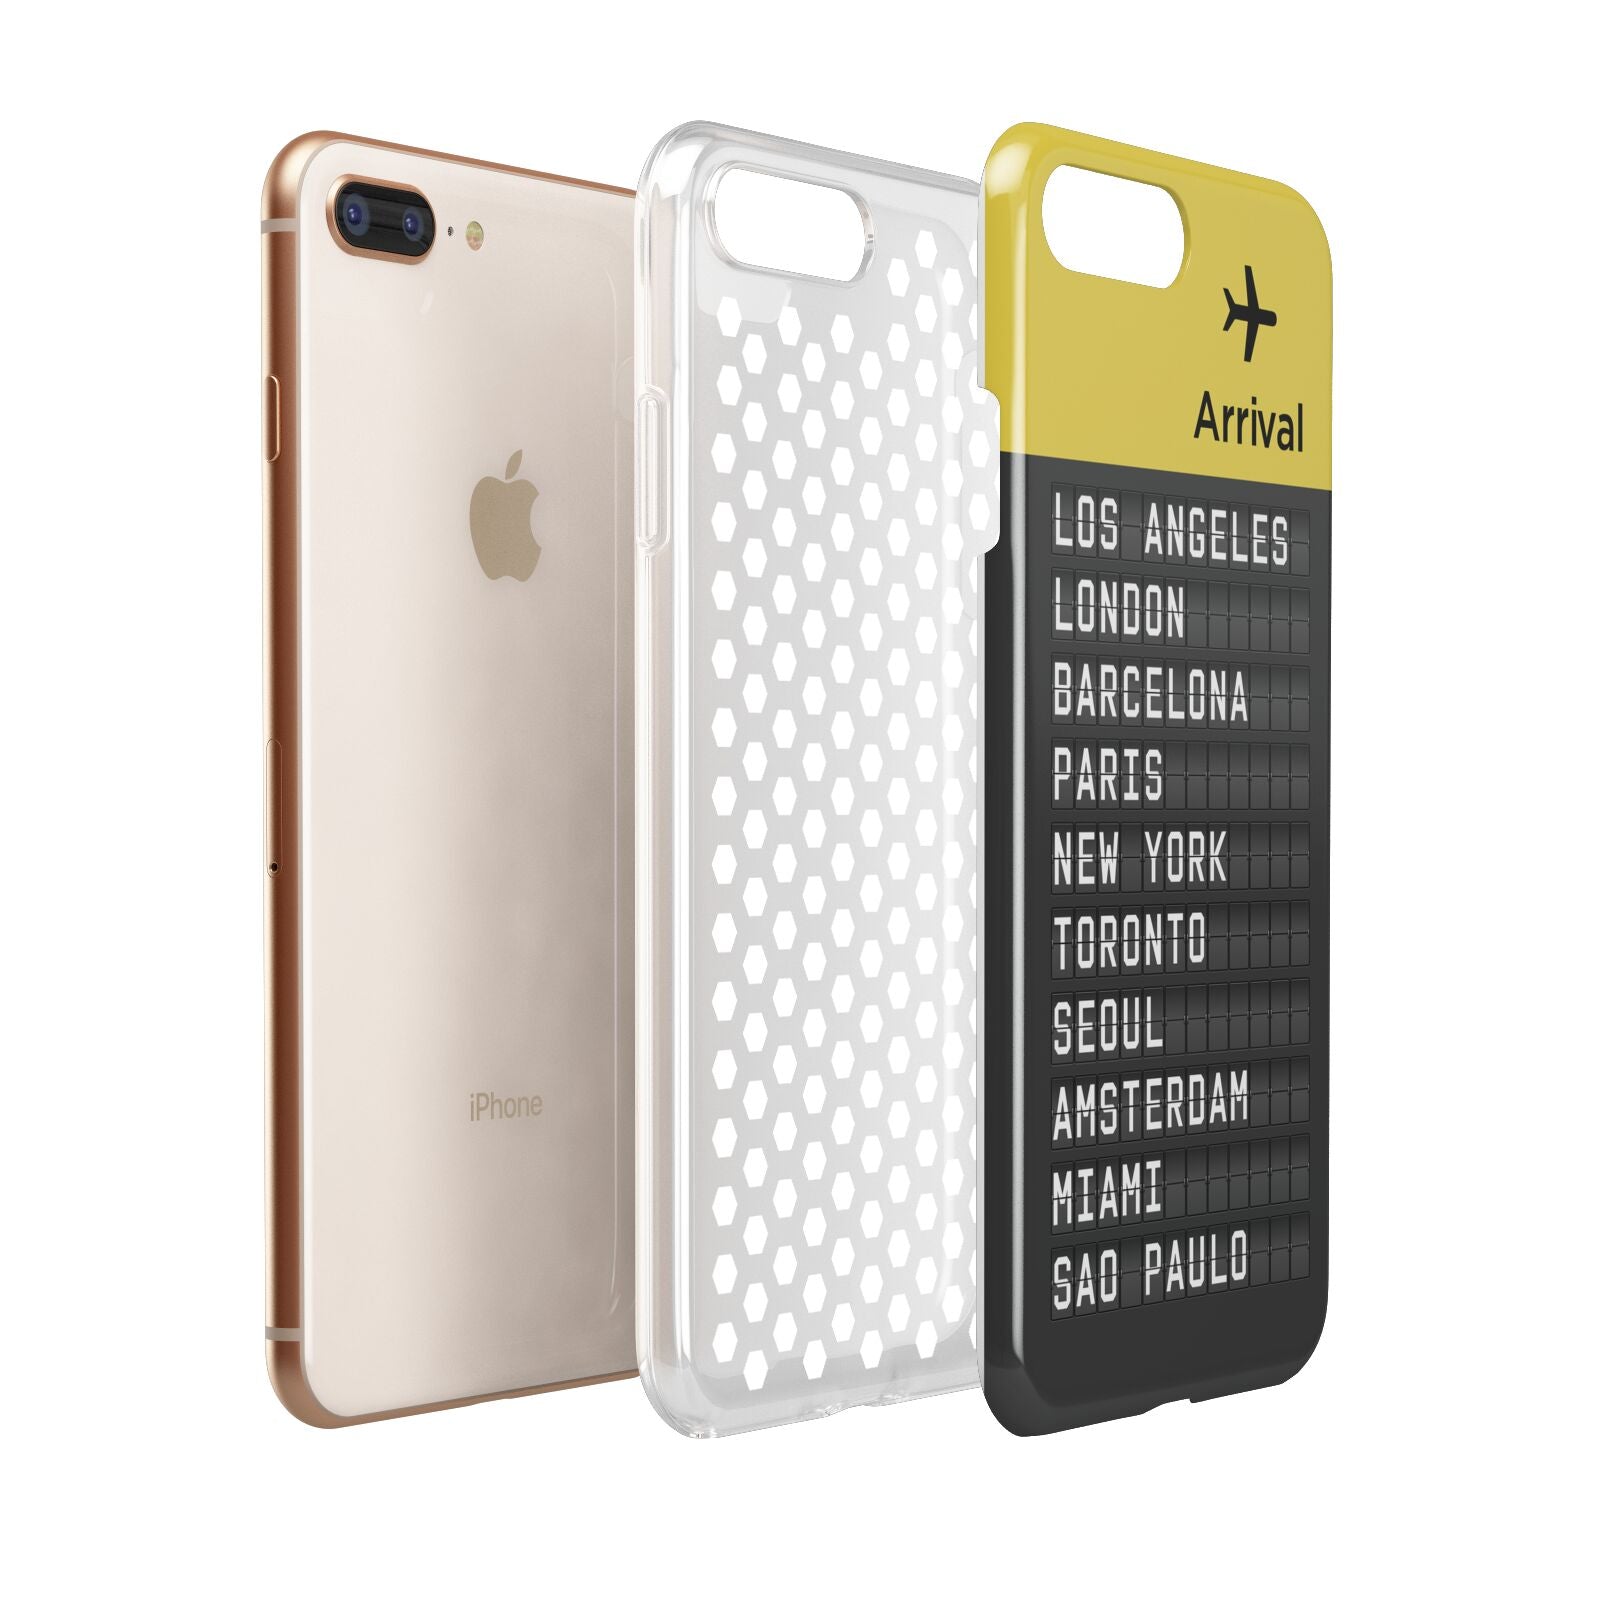 Airport Arrivals Board Apple iPhone 7 8 Plus 3D Tough Case Expanded View